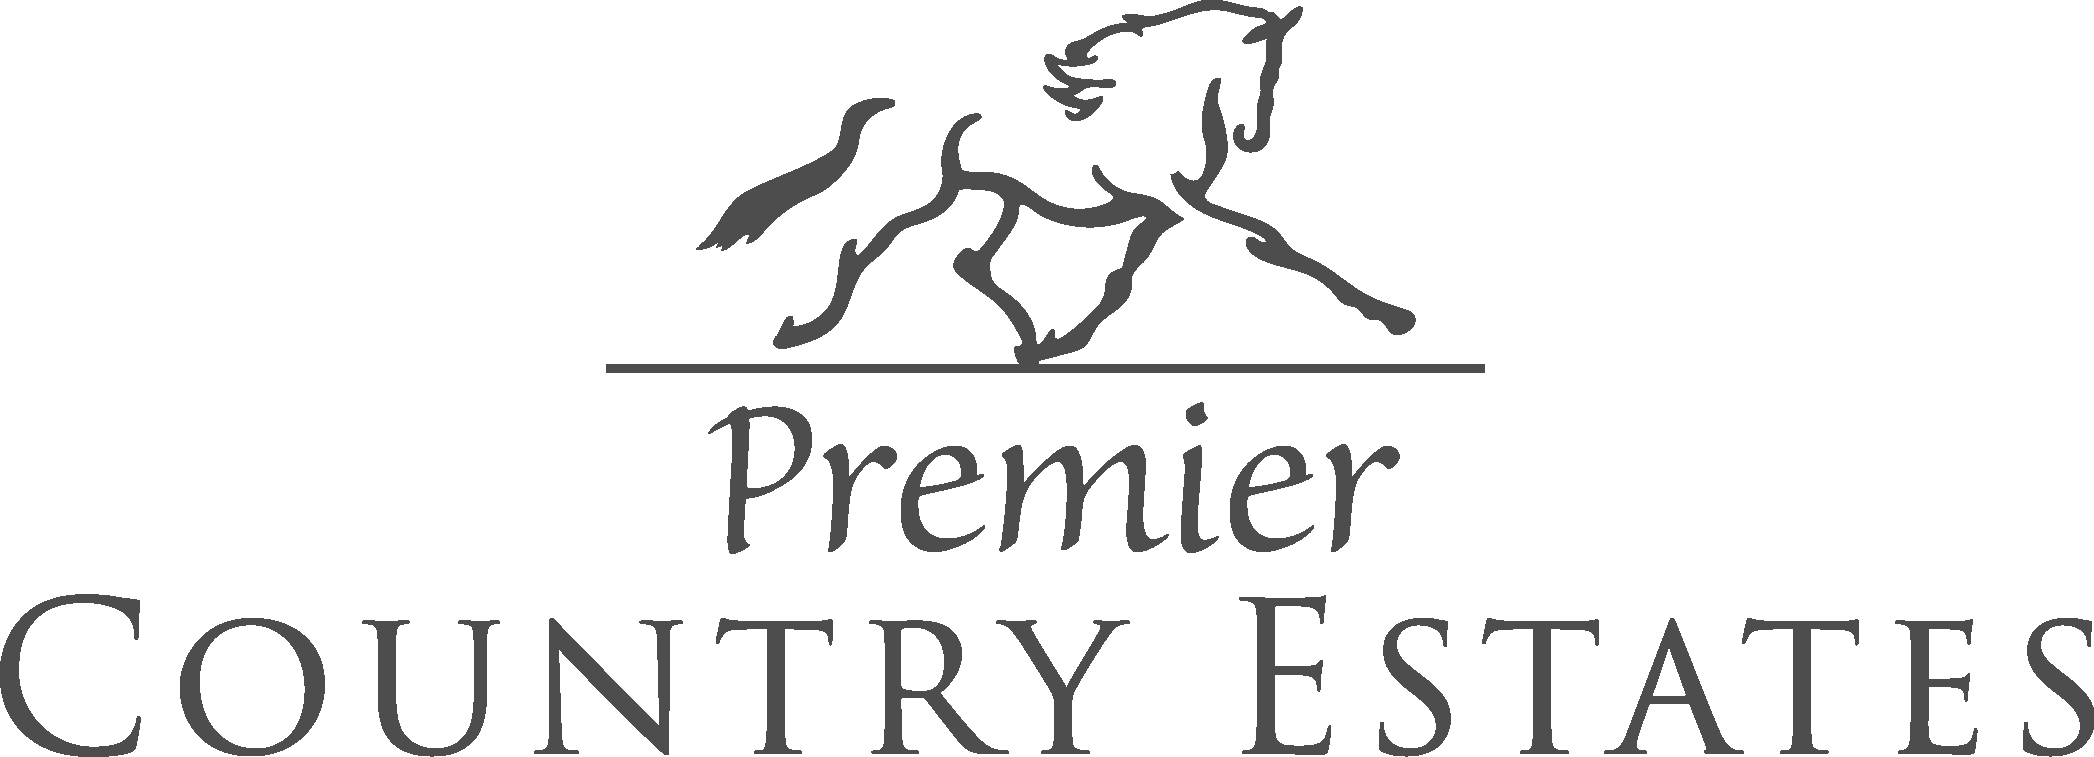 Premier Country Estates